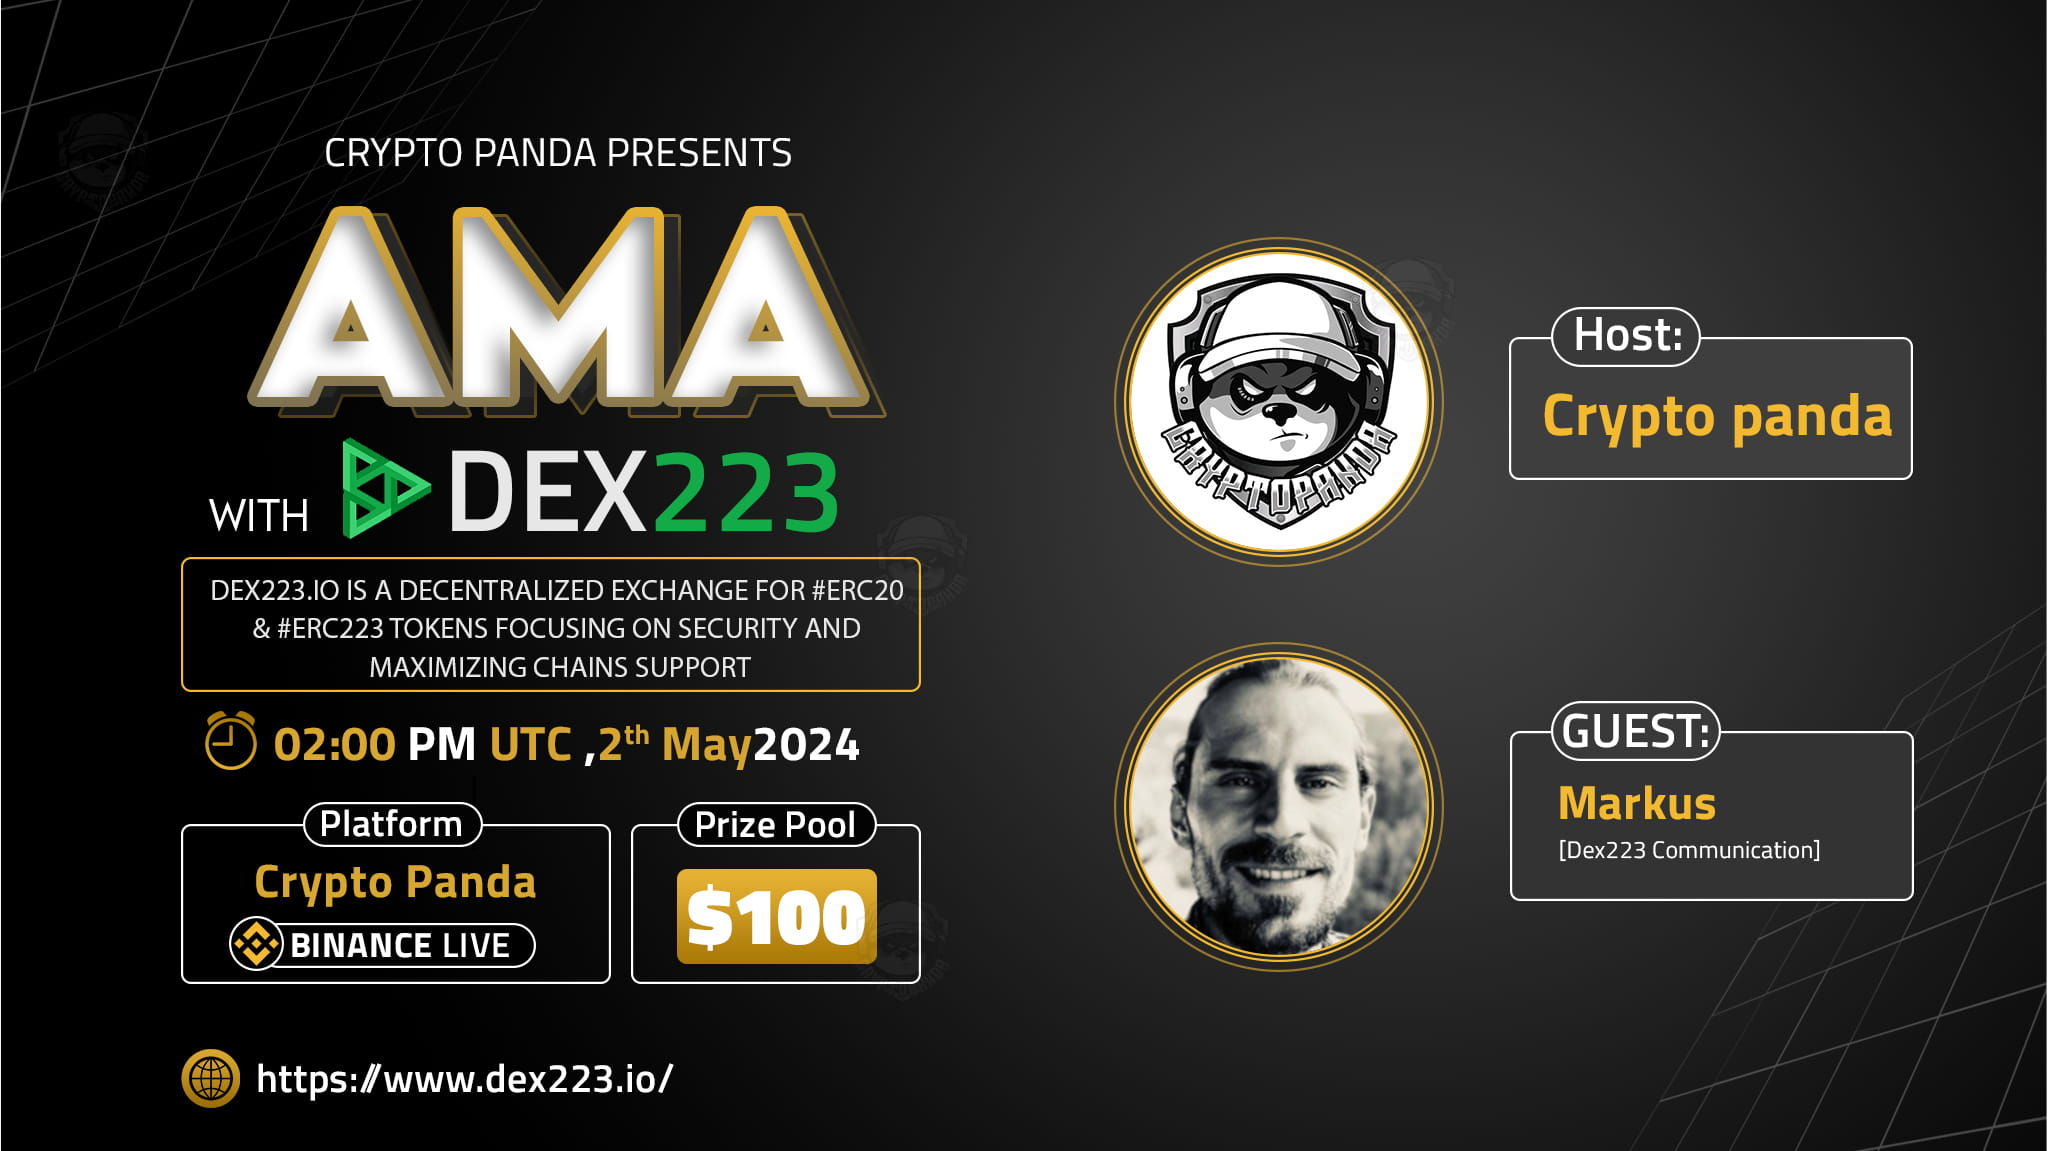 Crypto Panda presents AMA with DEX223